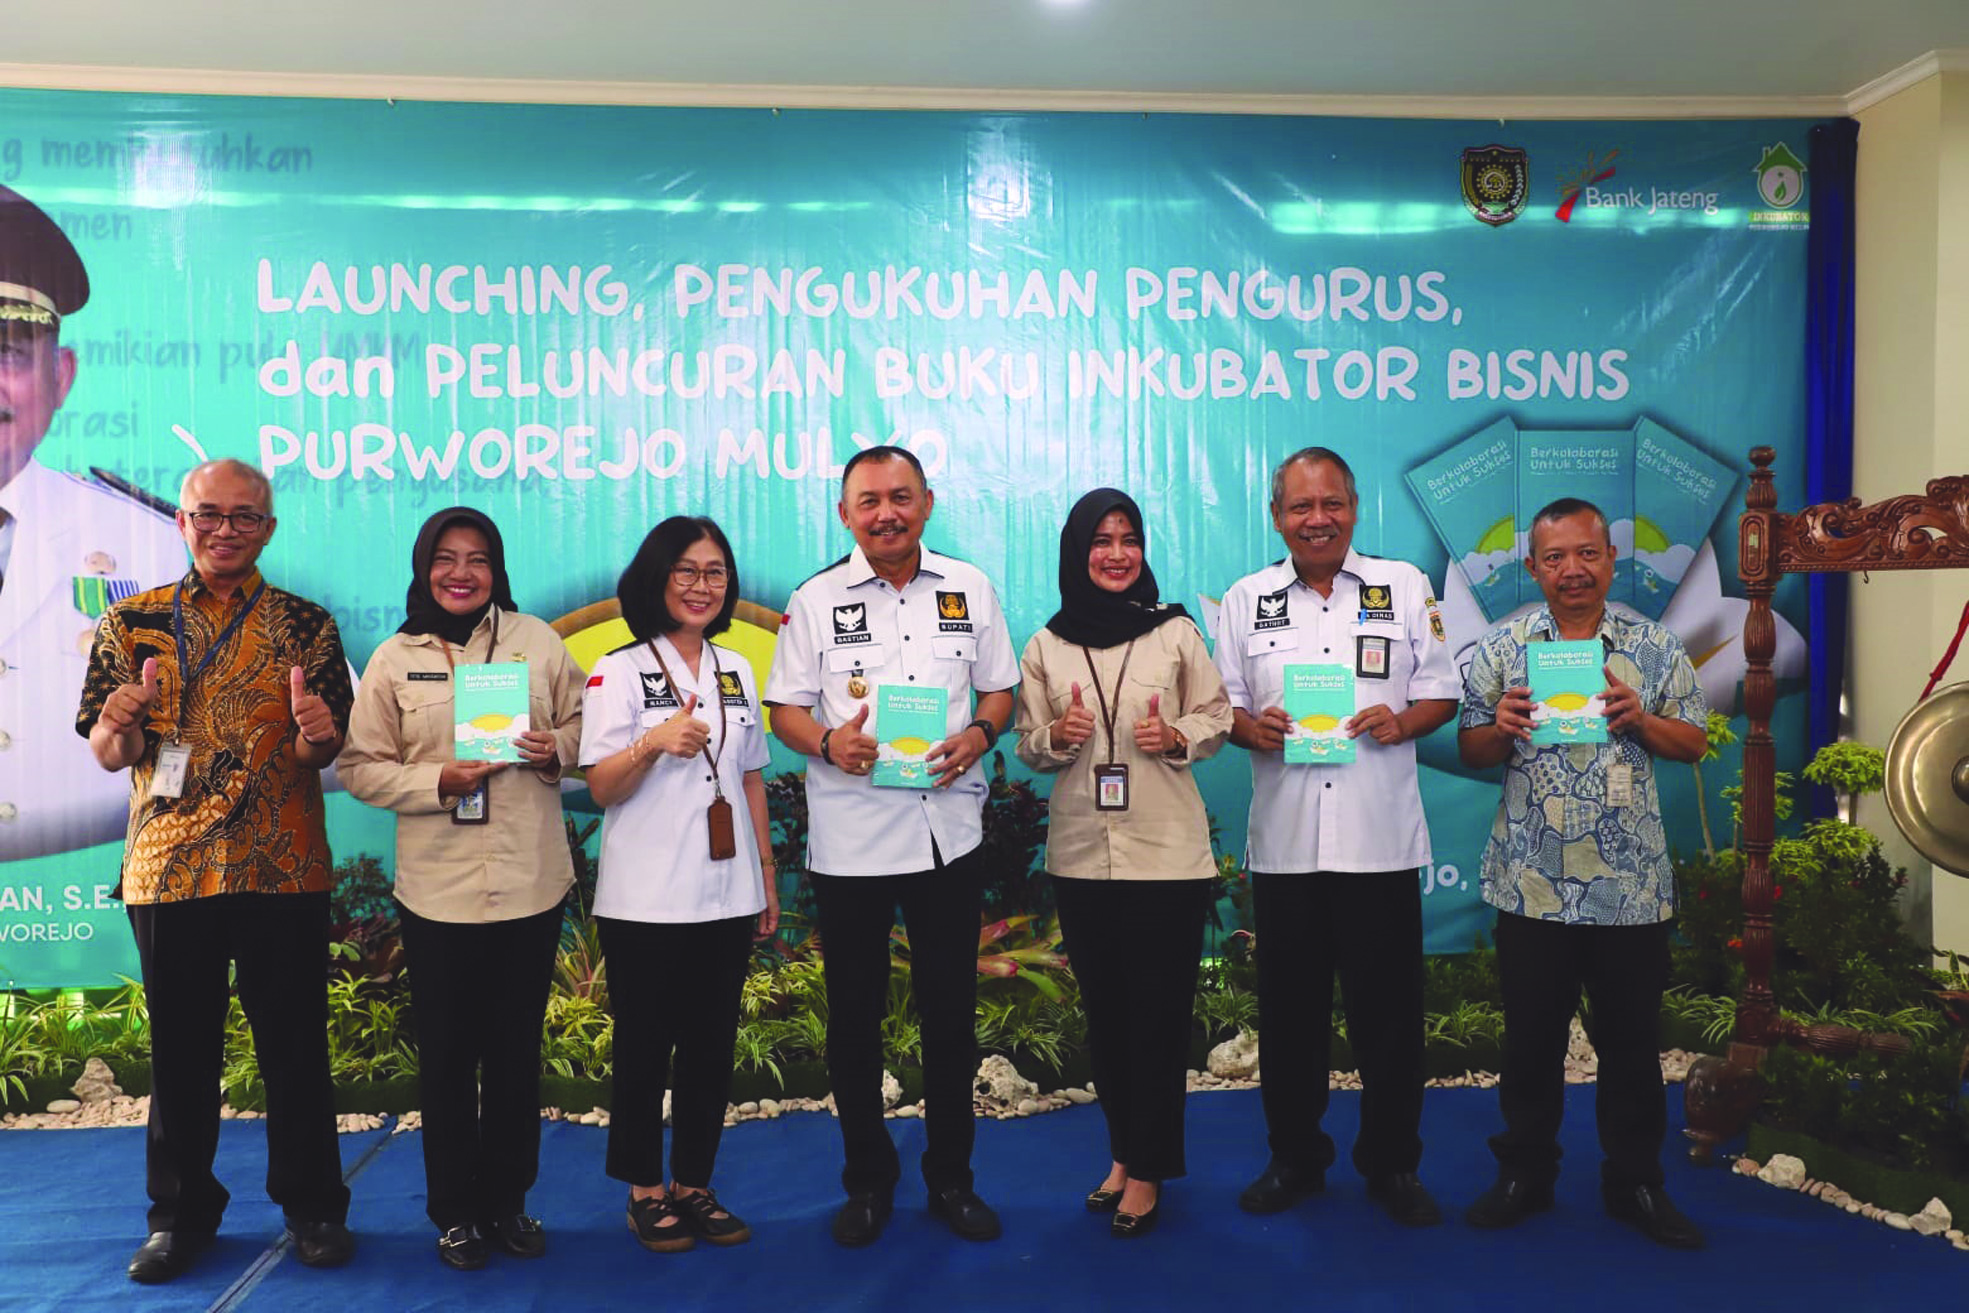 Dukung UMKM, Inkubator Bisnis Purworejo Mulyo Diluncurkan